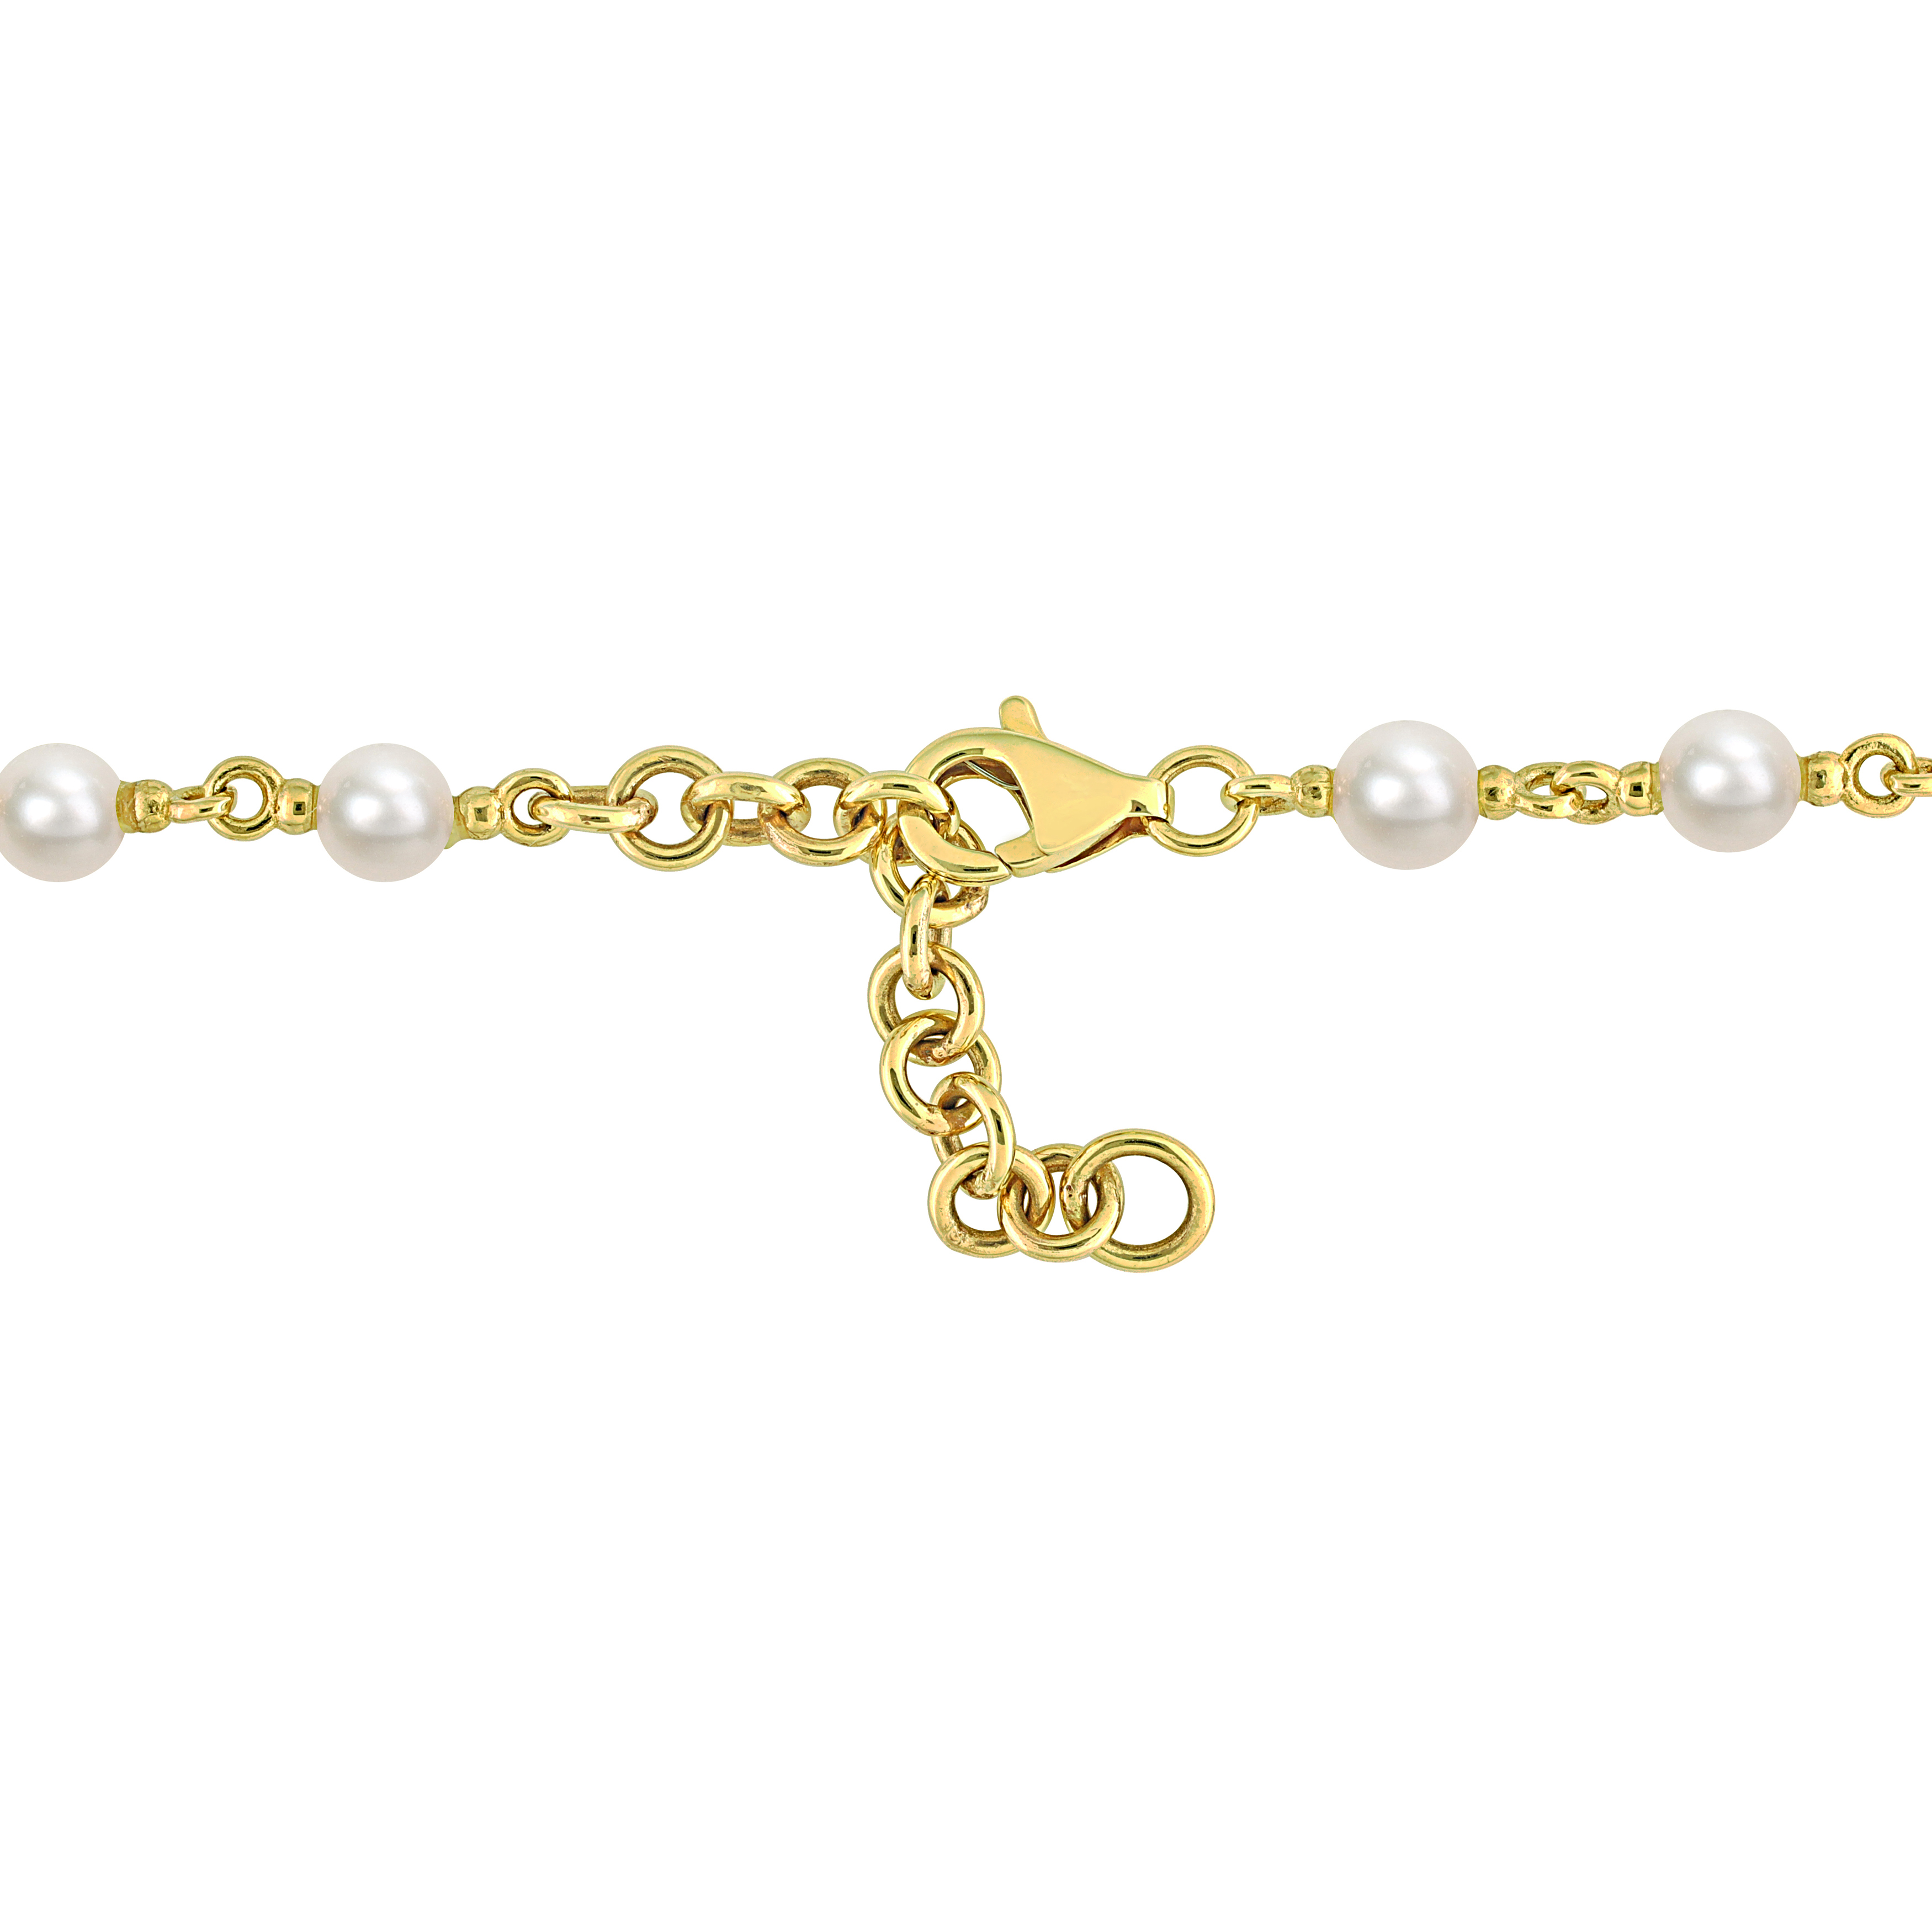 3.5 - 4 MM White Freshwater Cultured Pearl Bracelet 10k Yellow Gold Length 7 inc.25